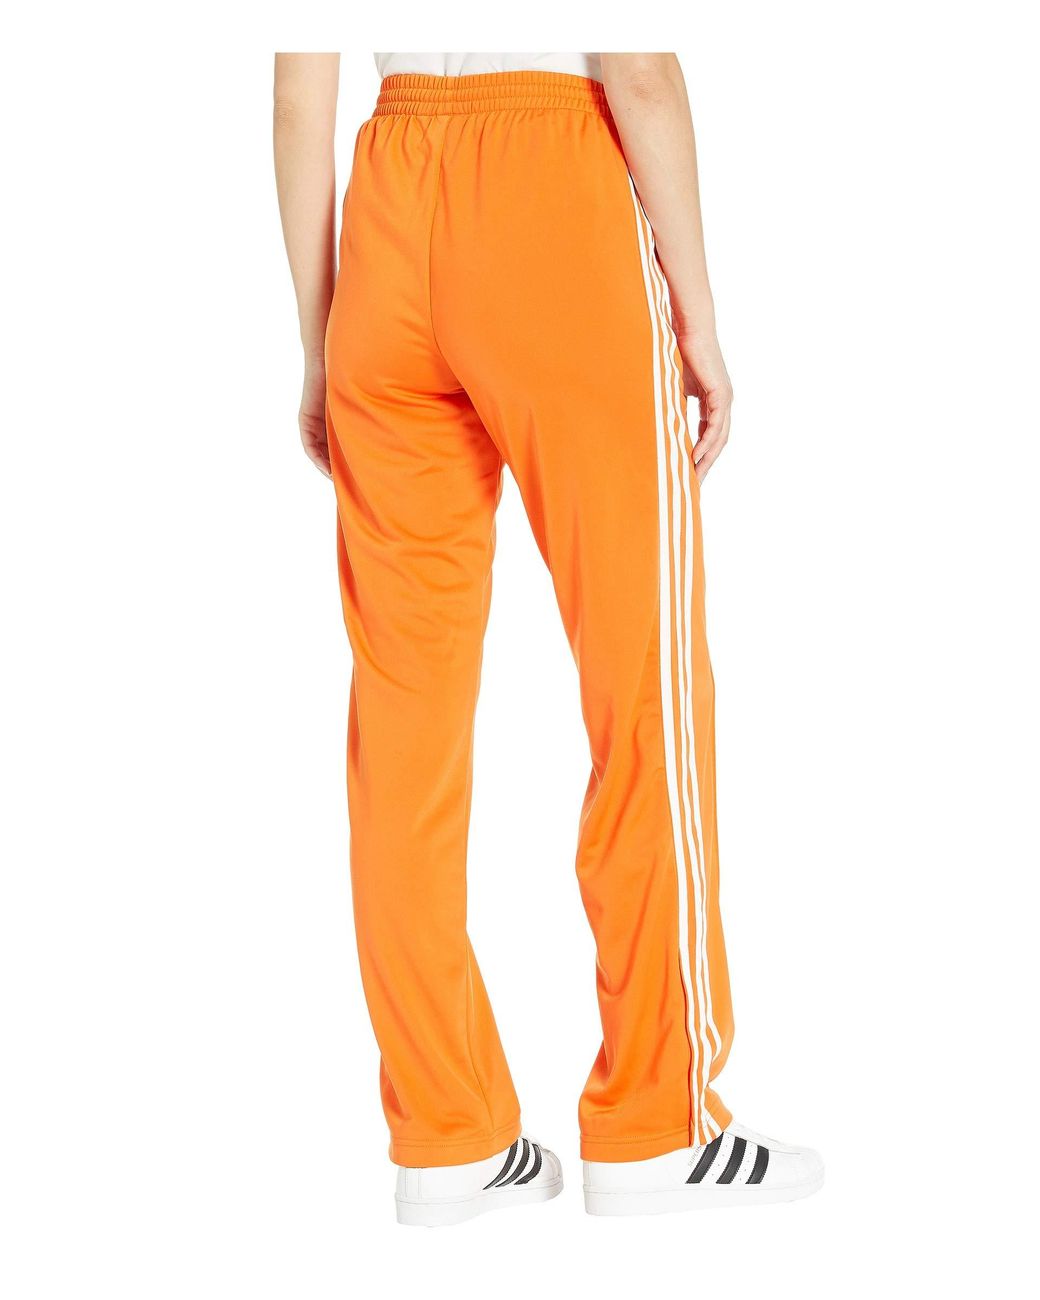 adidas Originals Firebird Track Pants, Orange